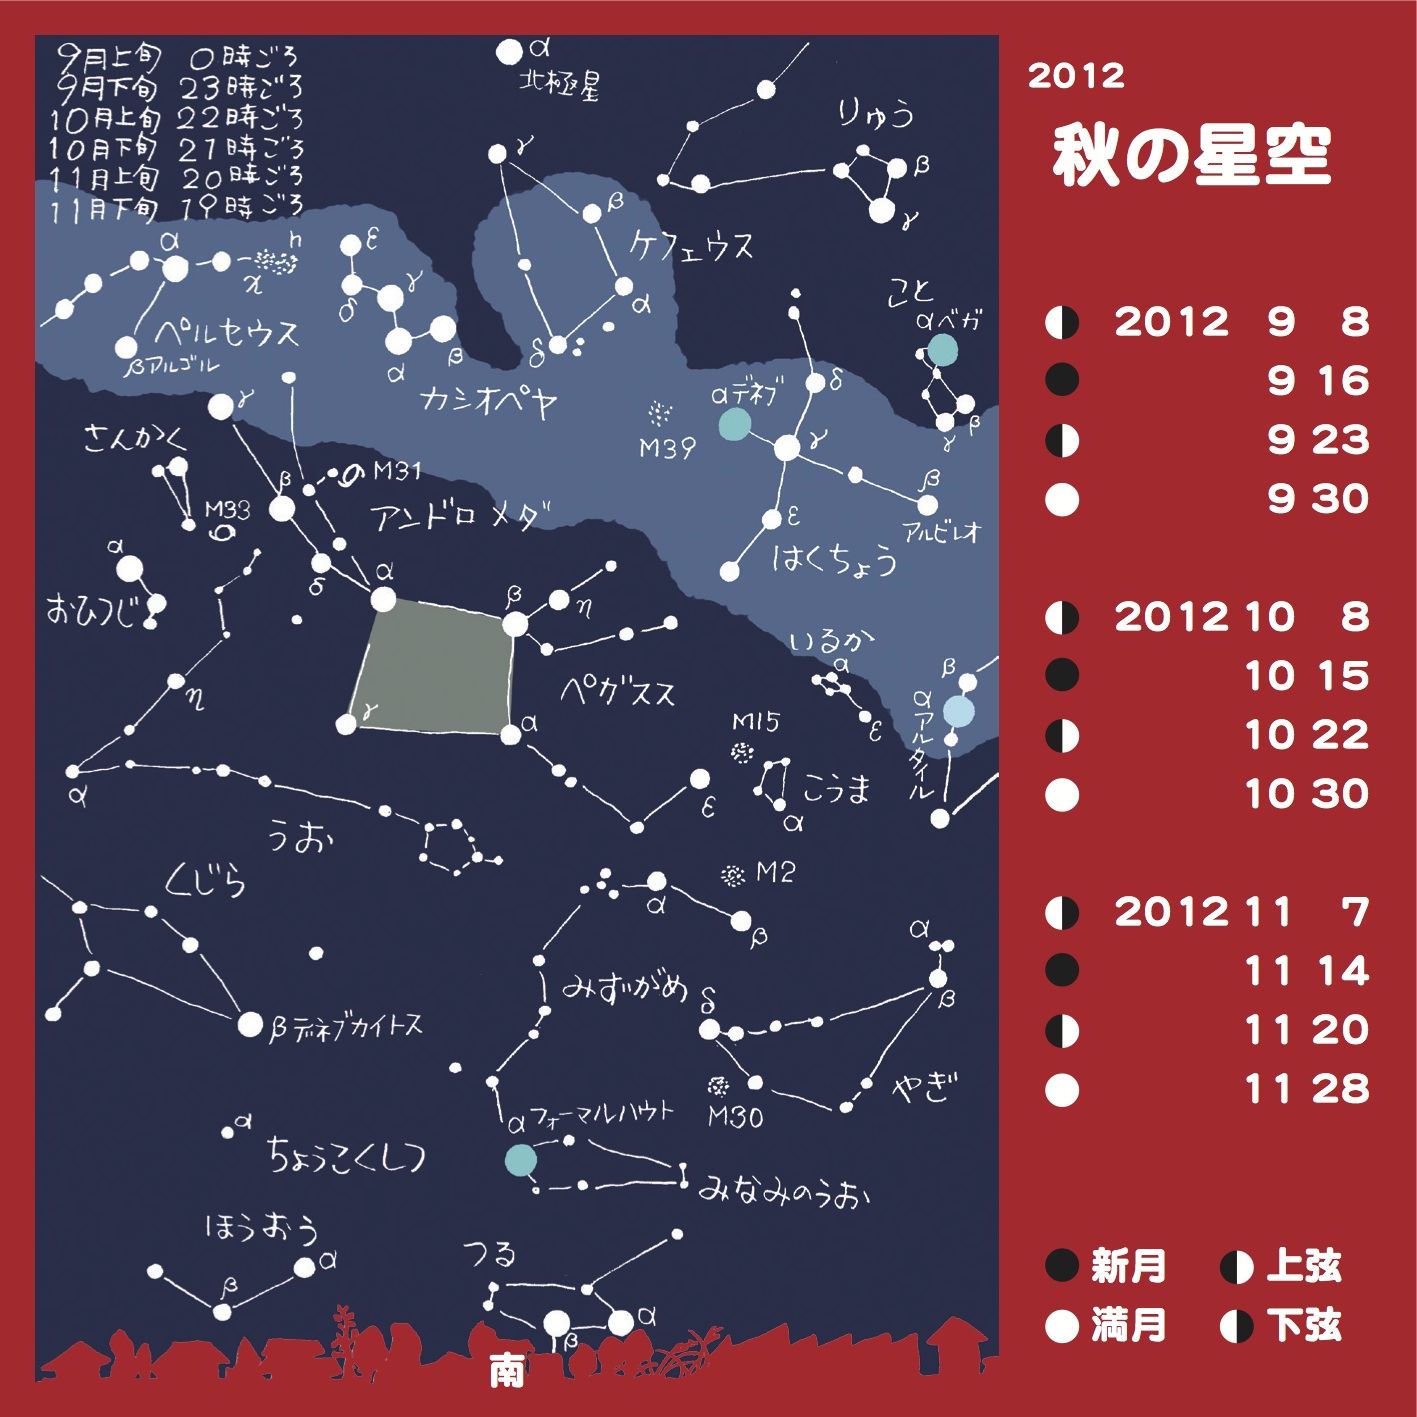 http://www.ncsm.city.nagoya.jp/study/astro/P1_2012_autumn.jpg